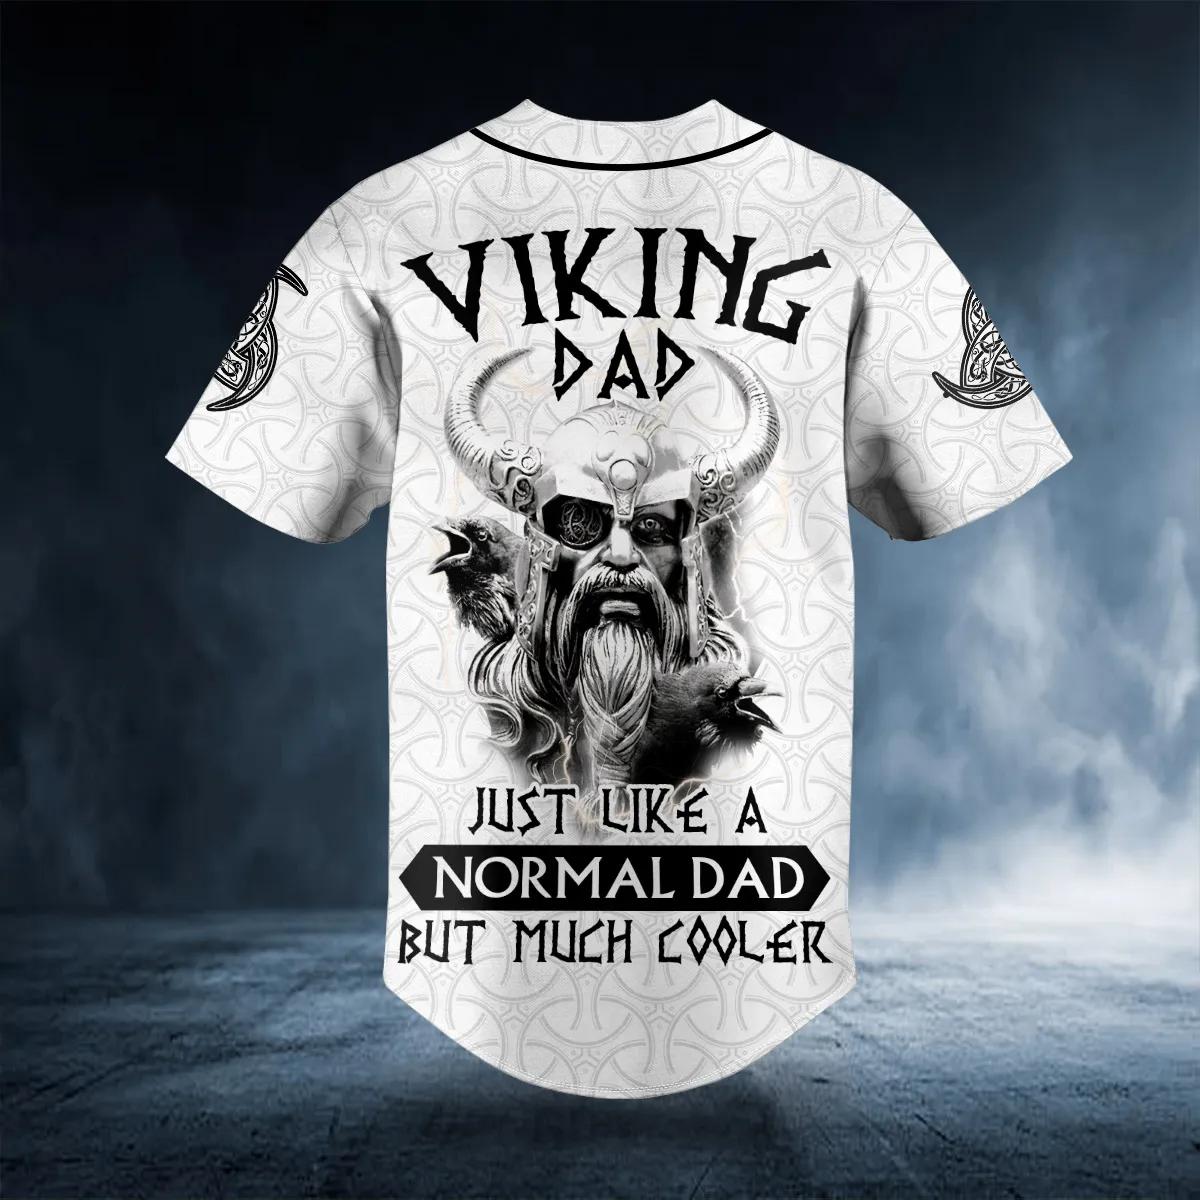 viking dad just like a normal dad but much cooler custom baseball jersey 4049 7jveQ